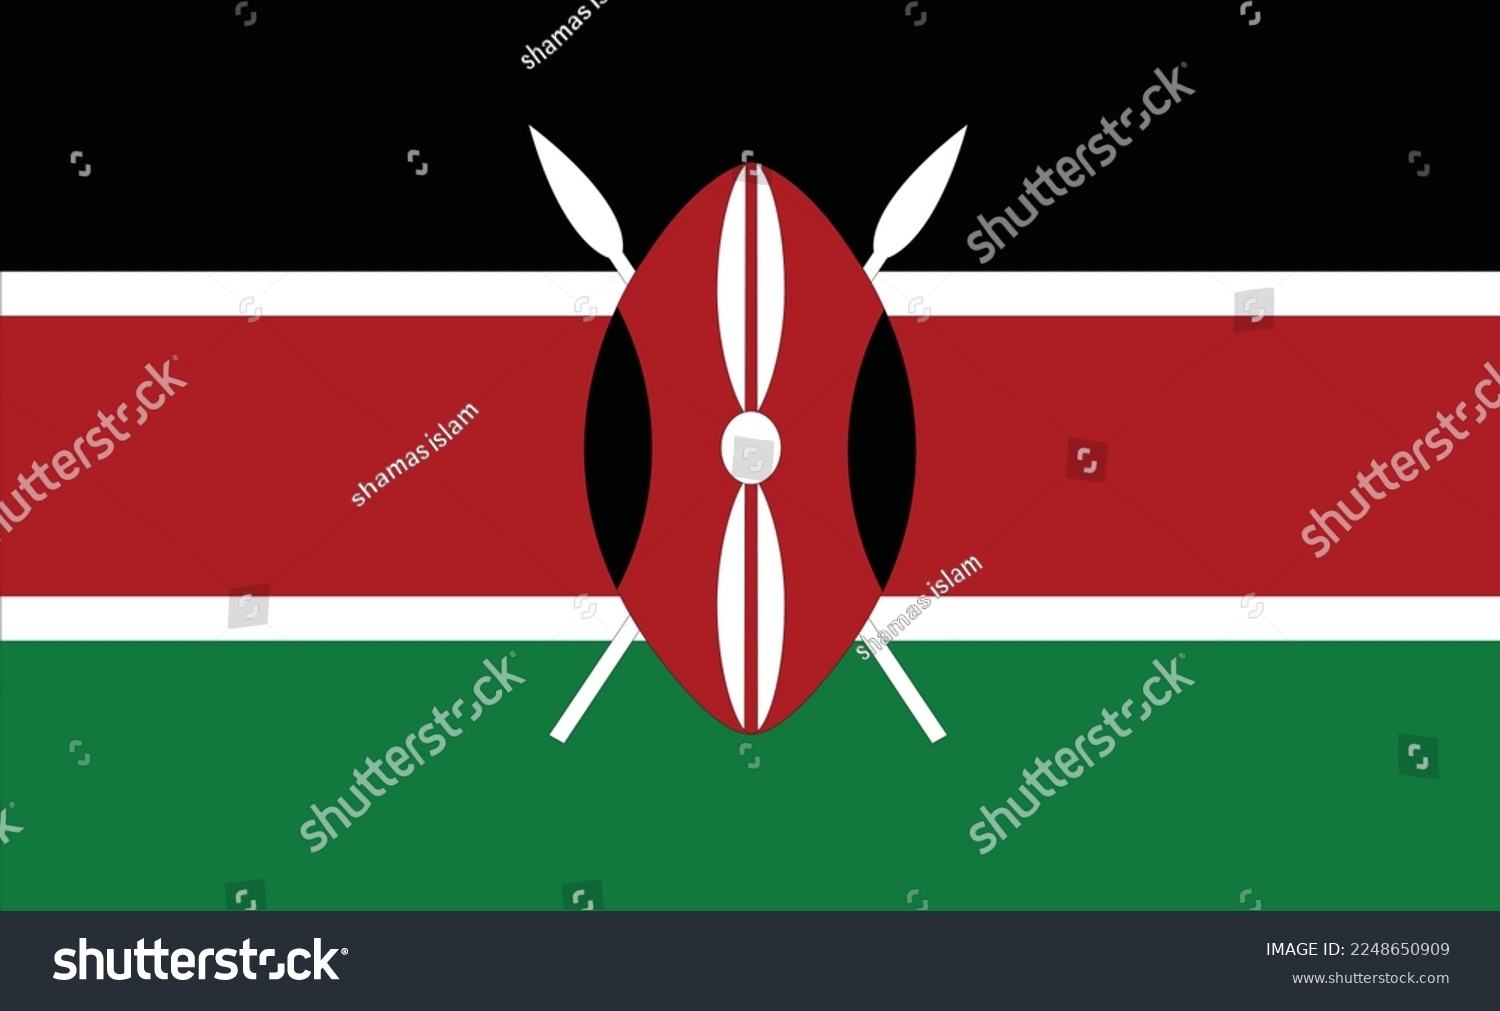 Kenya Flag Design Illustration Vectors Stock Vector Royalty Free 2248650909 Shutterstock